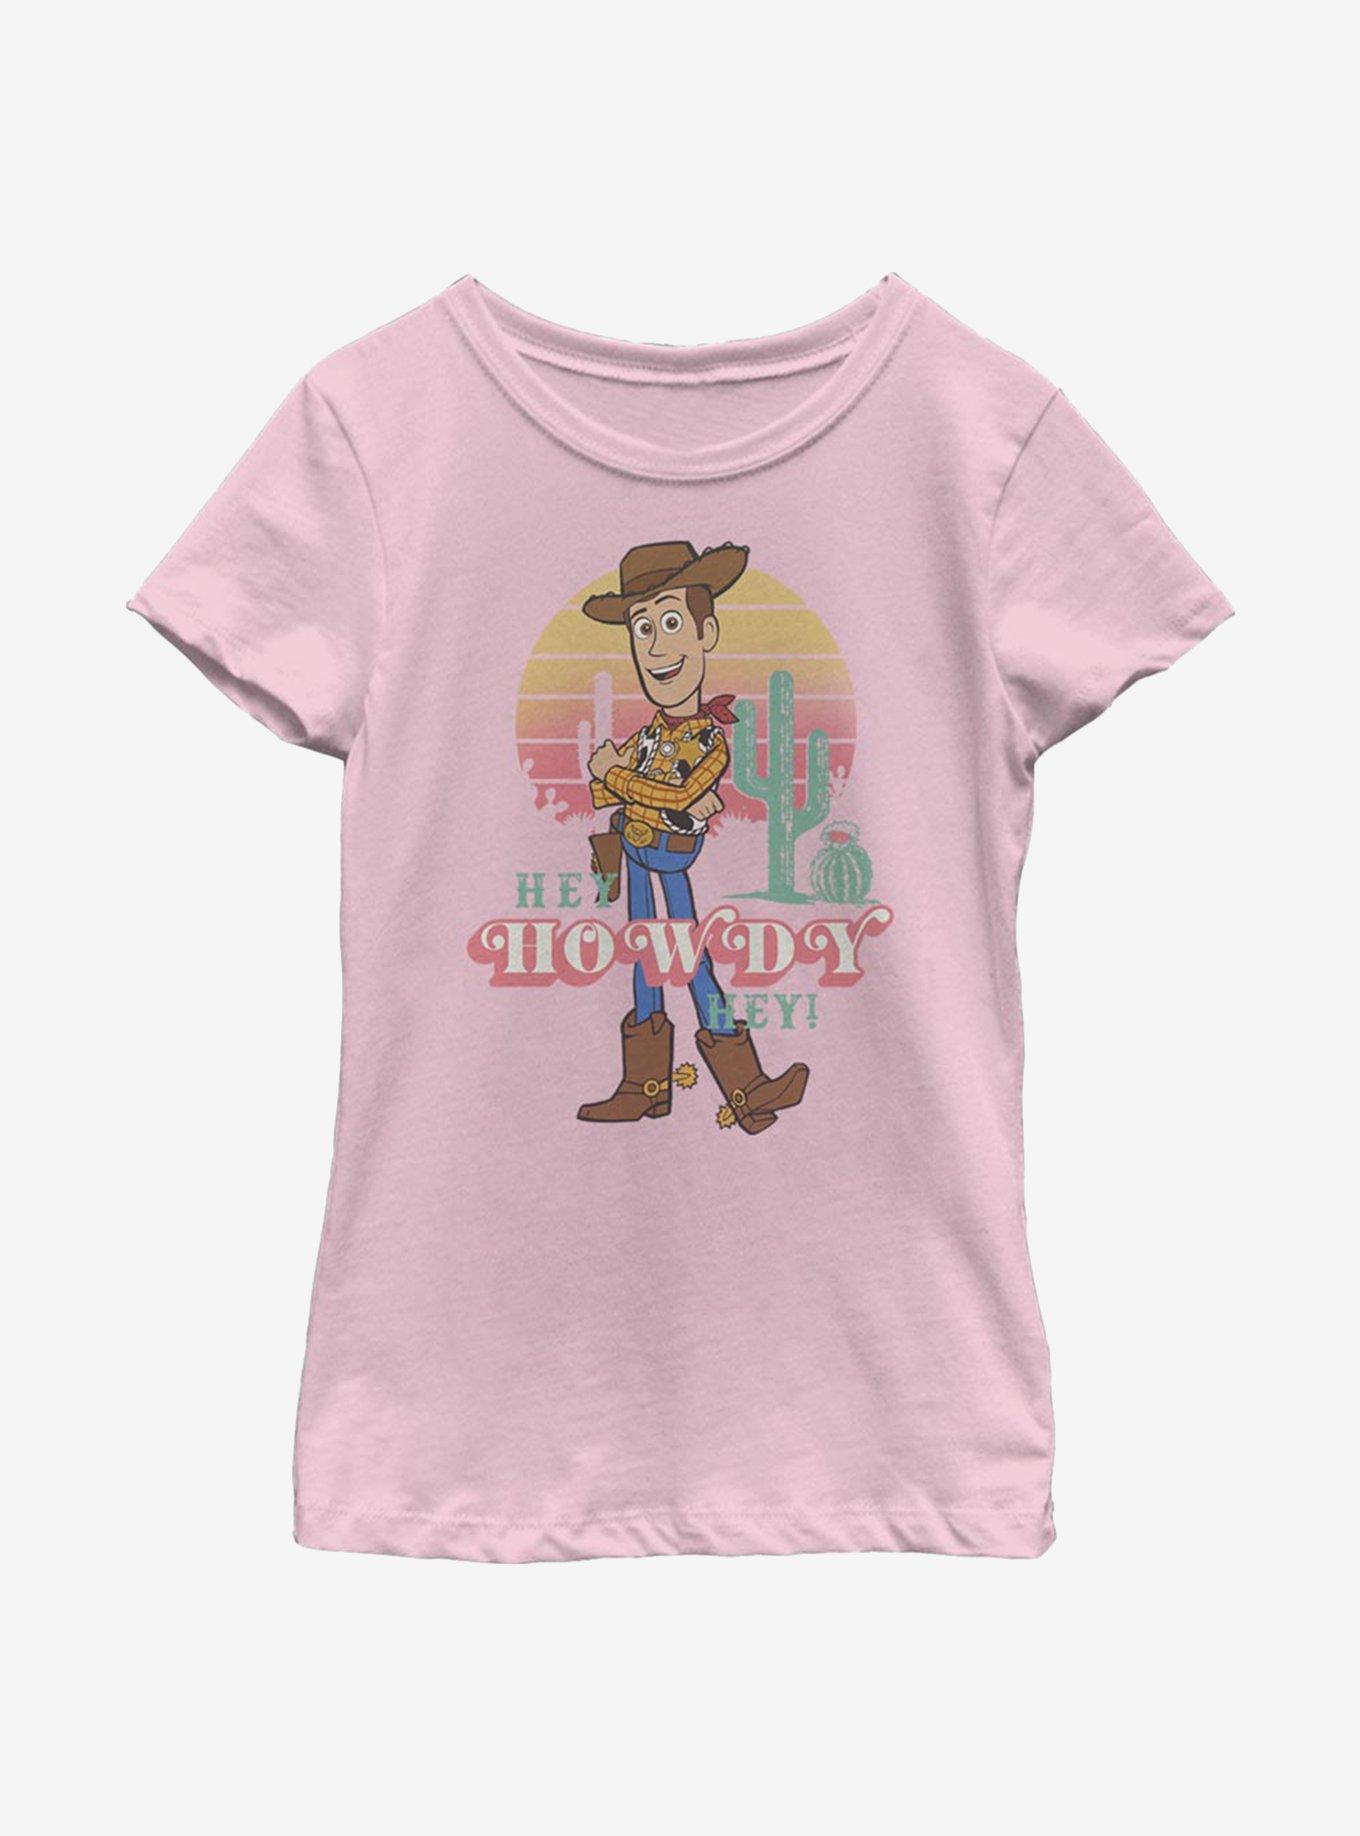 Disney Pixar Toy Story 4 Hey Howdy Youth Girls T-Shirt, PINK, hi-res